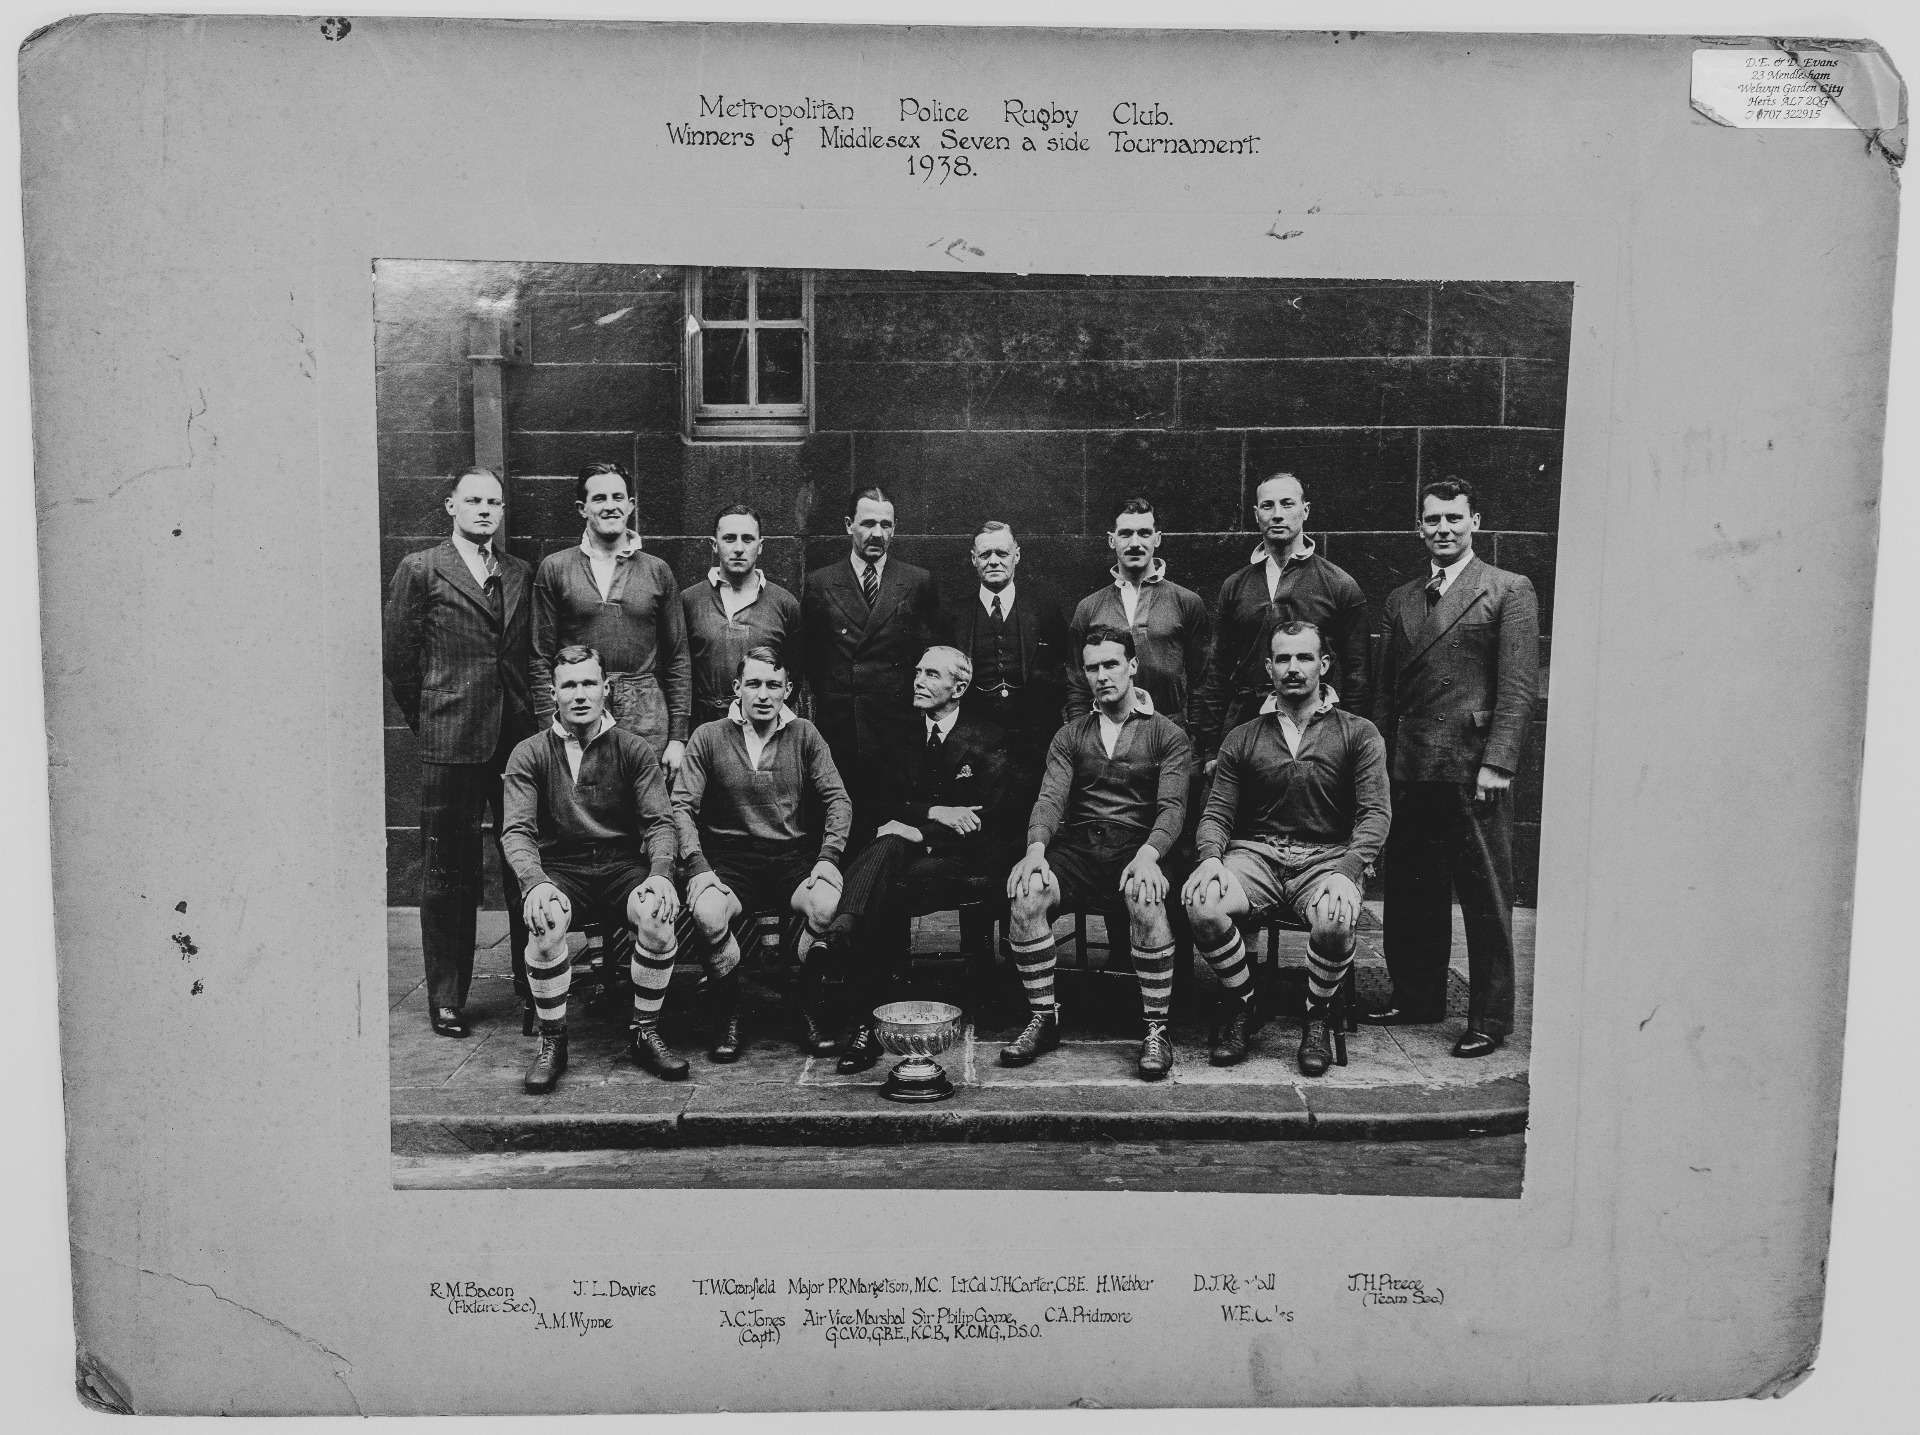 Met Police Rugby Club winners of Middlesex Sevens in 1938